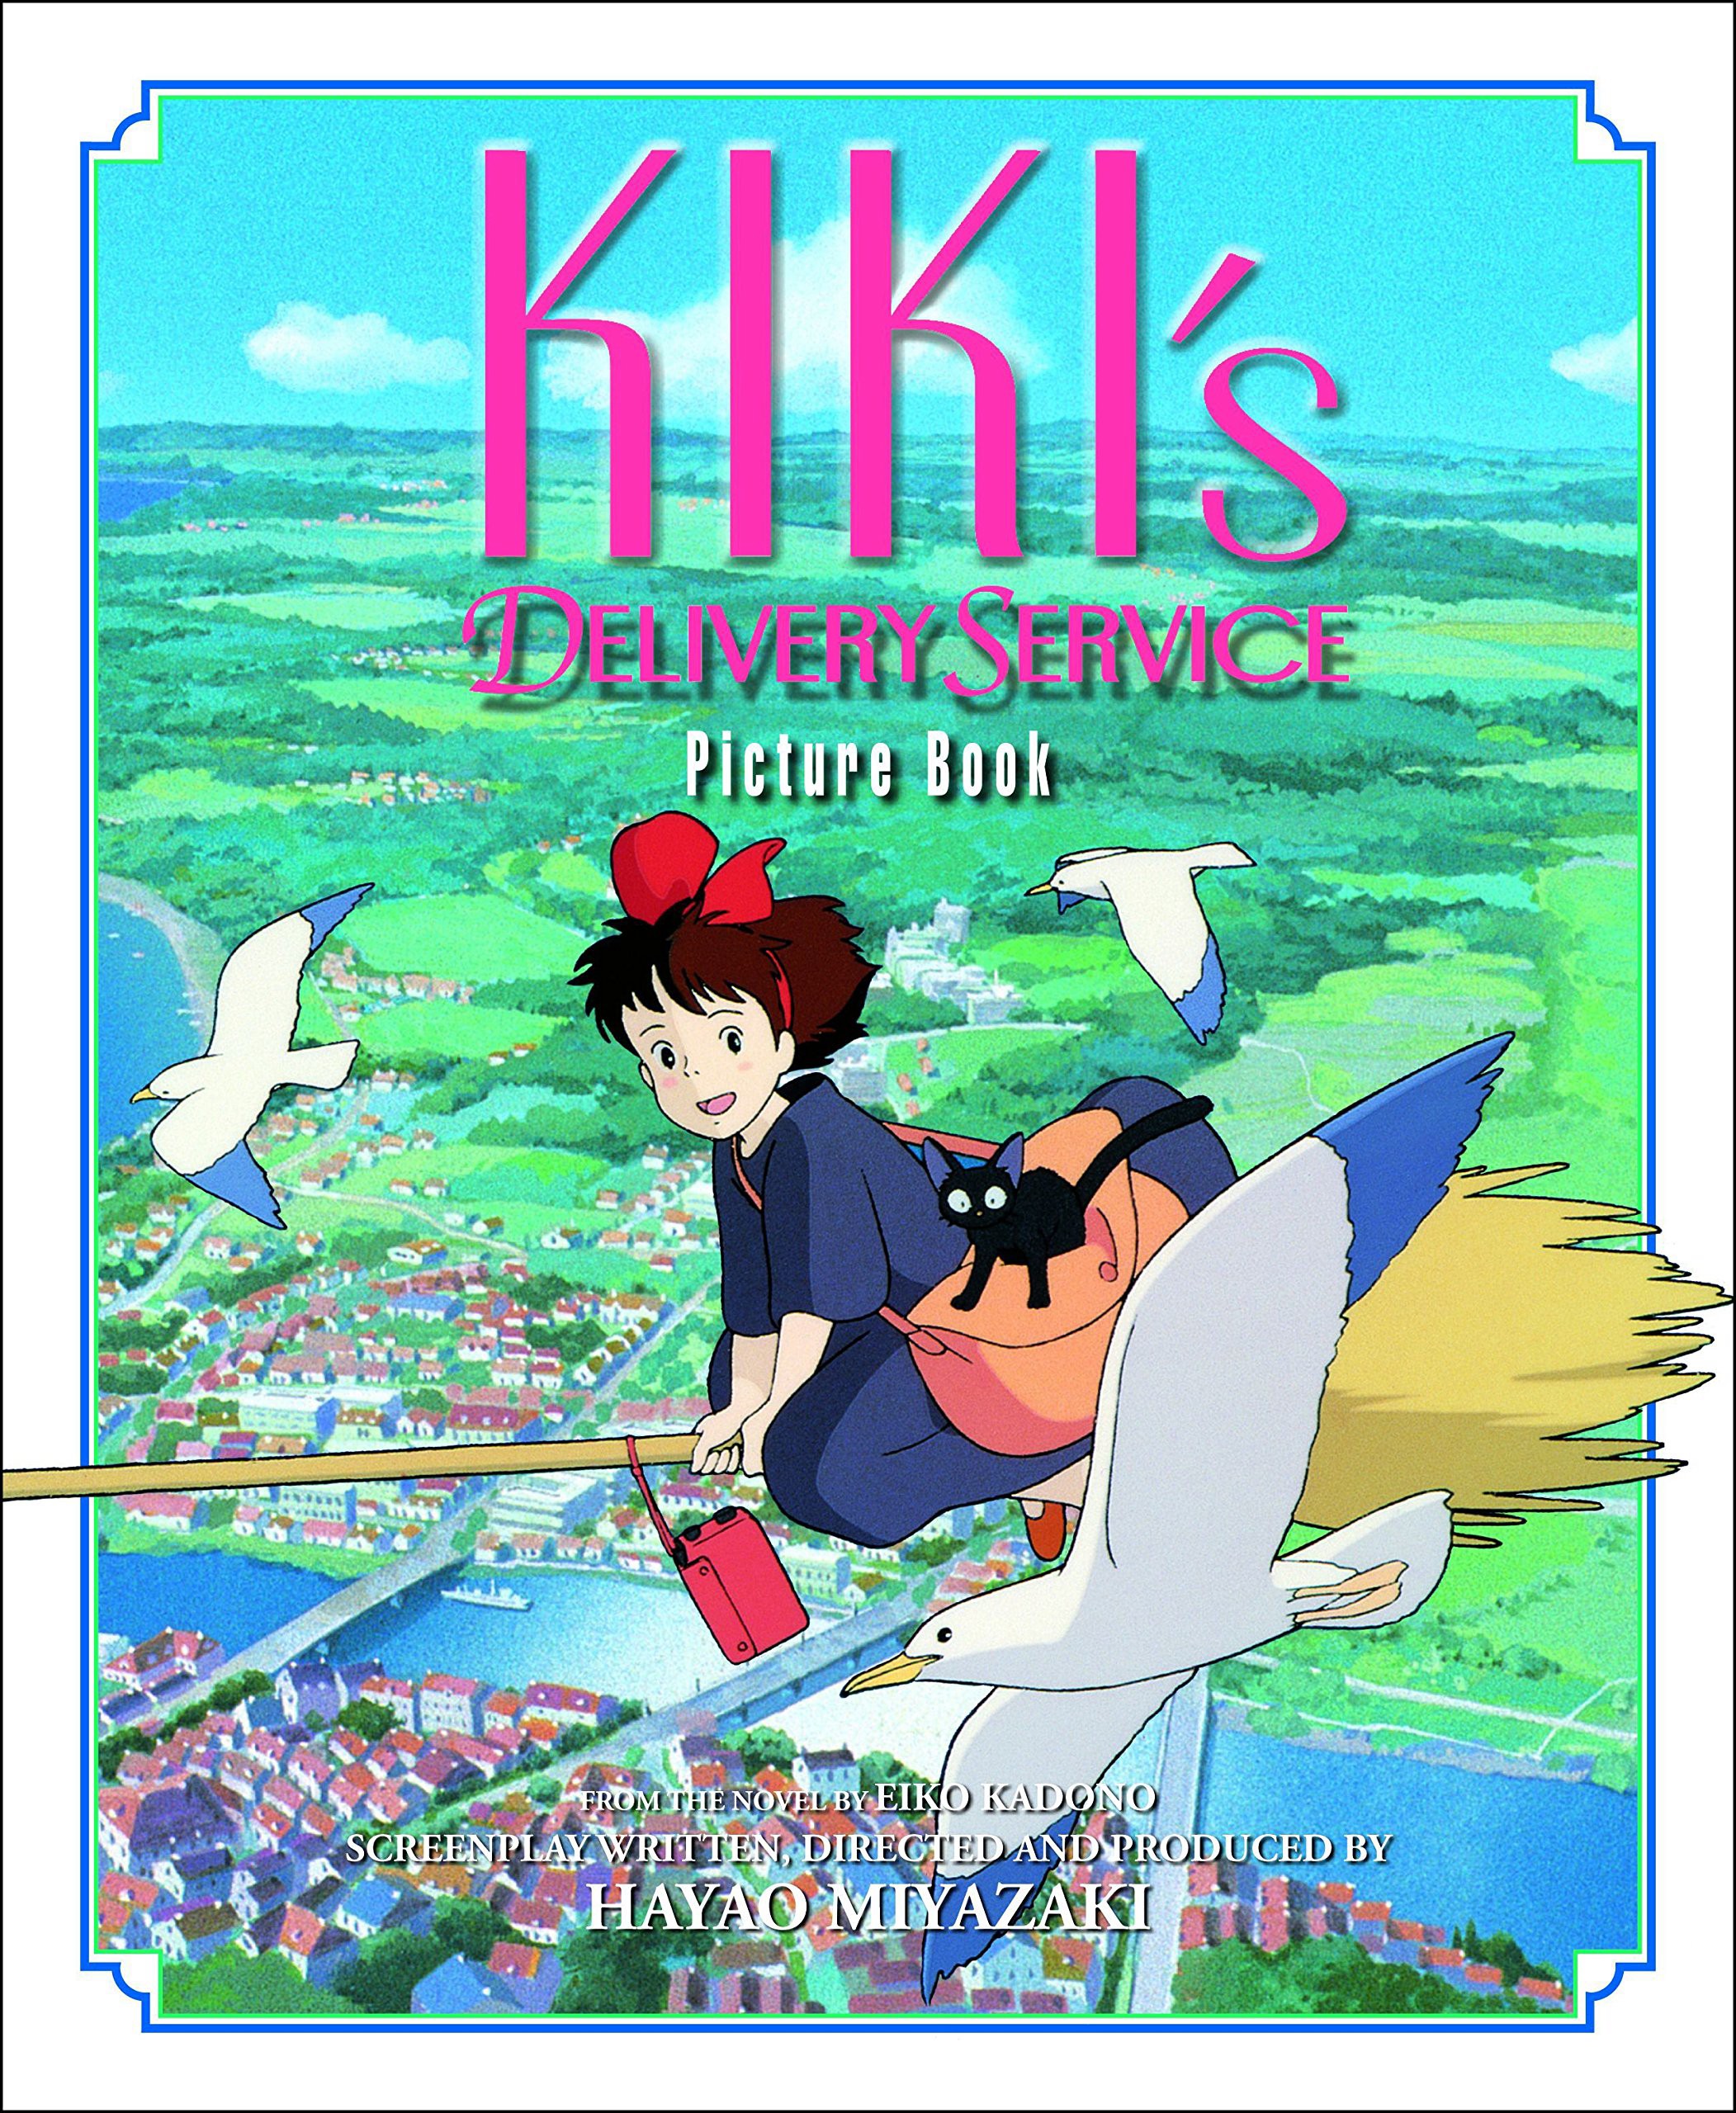 Dịch vụ giao hàng của phù thủy Kiki | Kiki’s Delivery Service (1989)